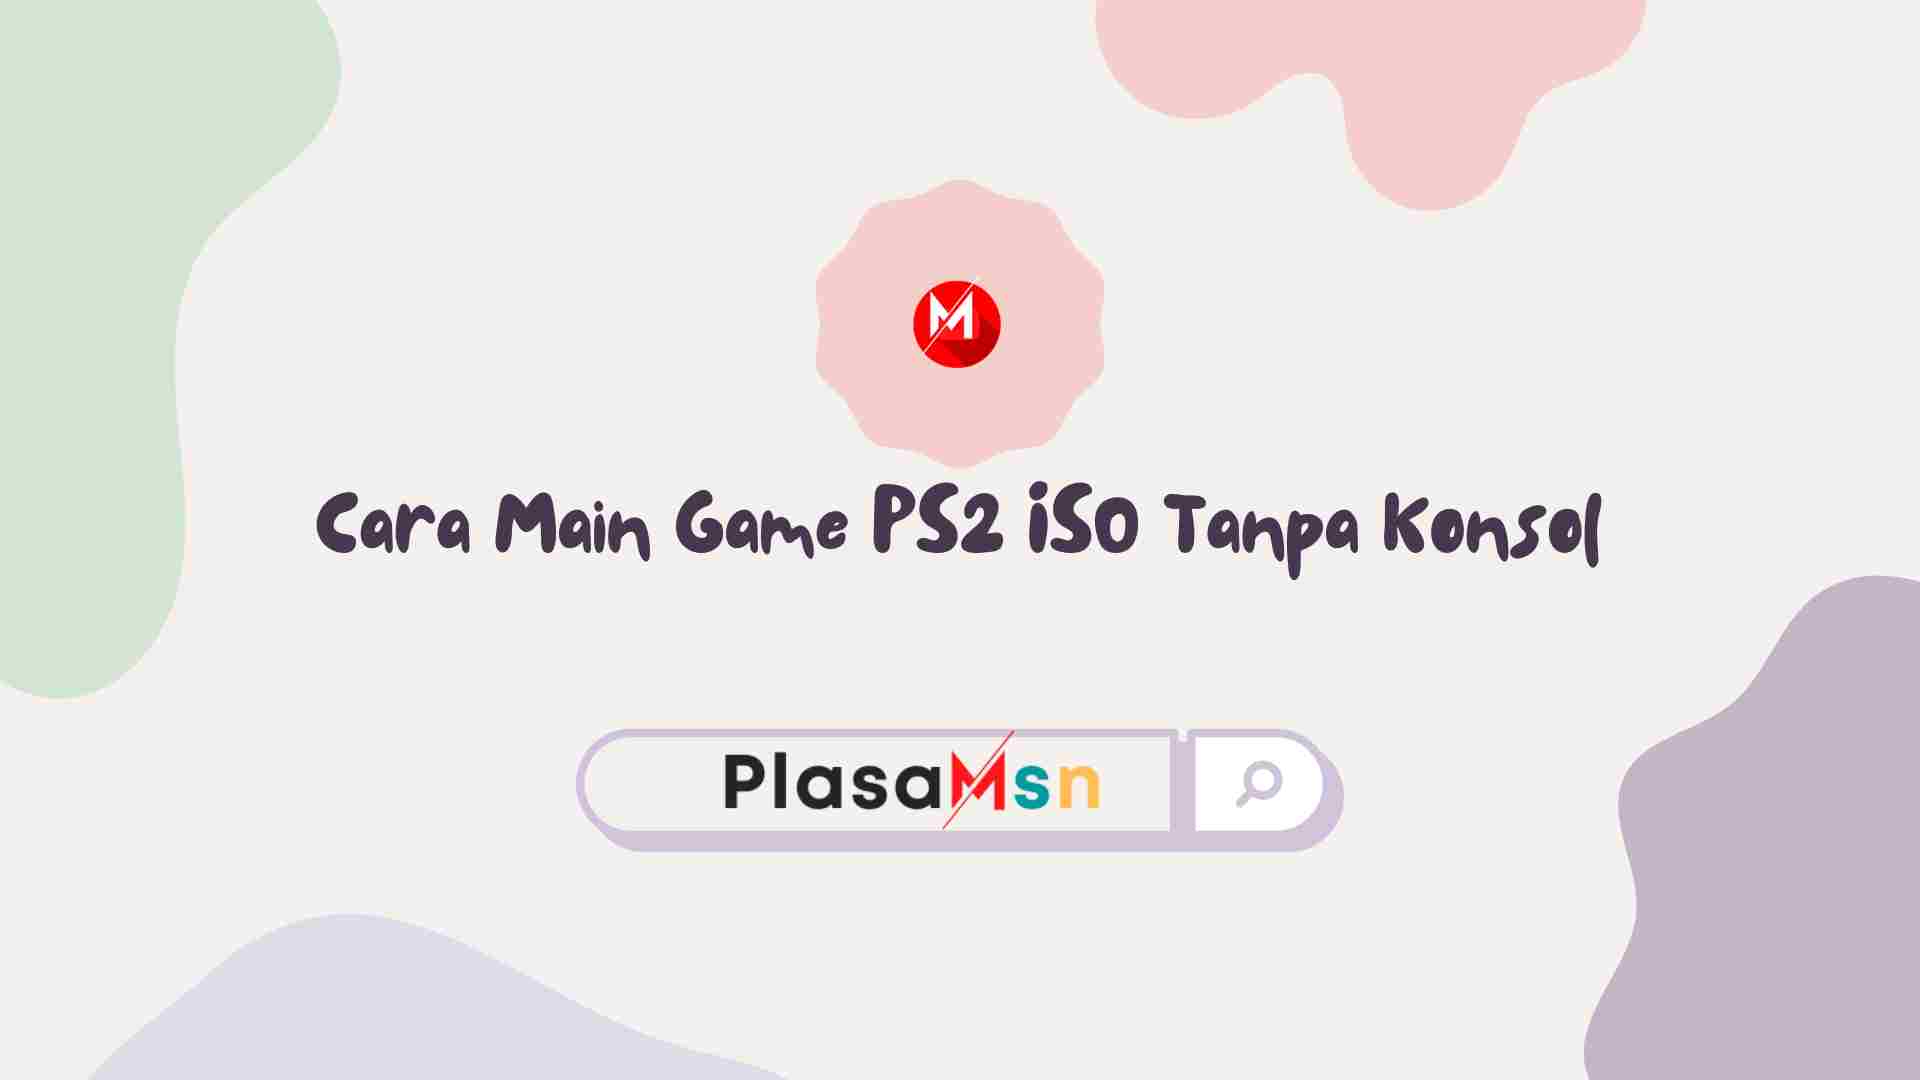 Cara Main Game PS2 ISO Tanpa Konsol